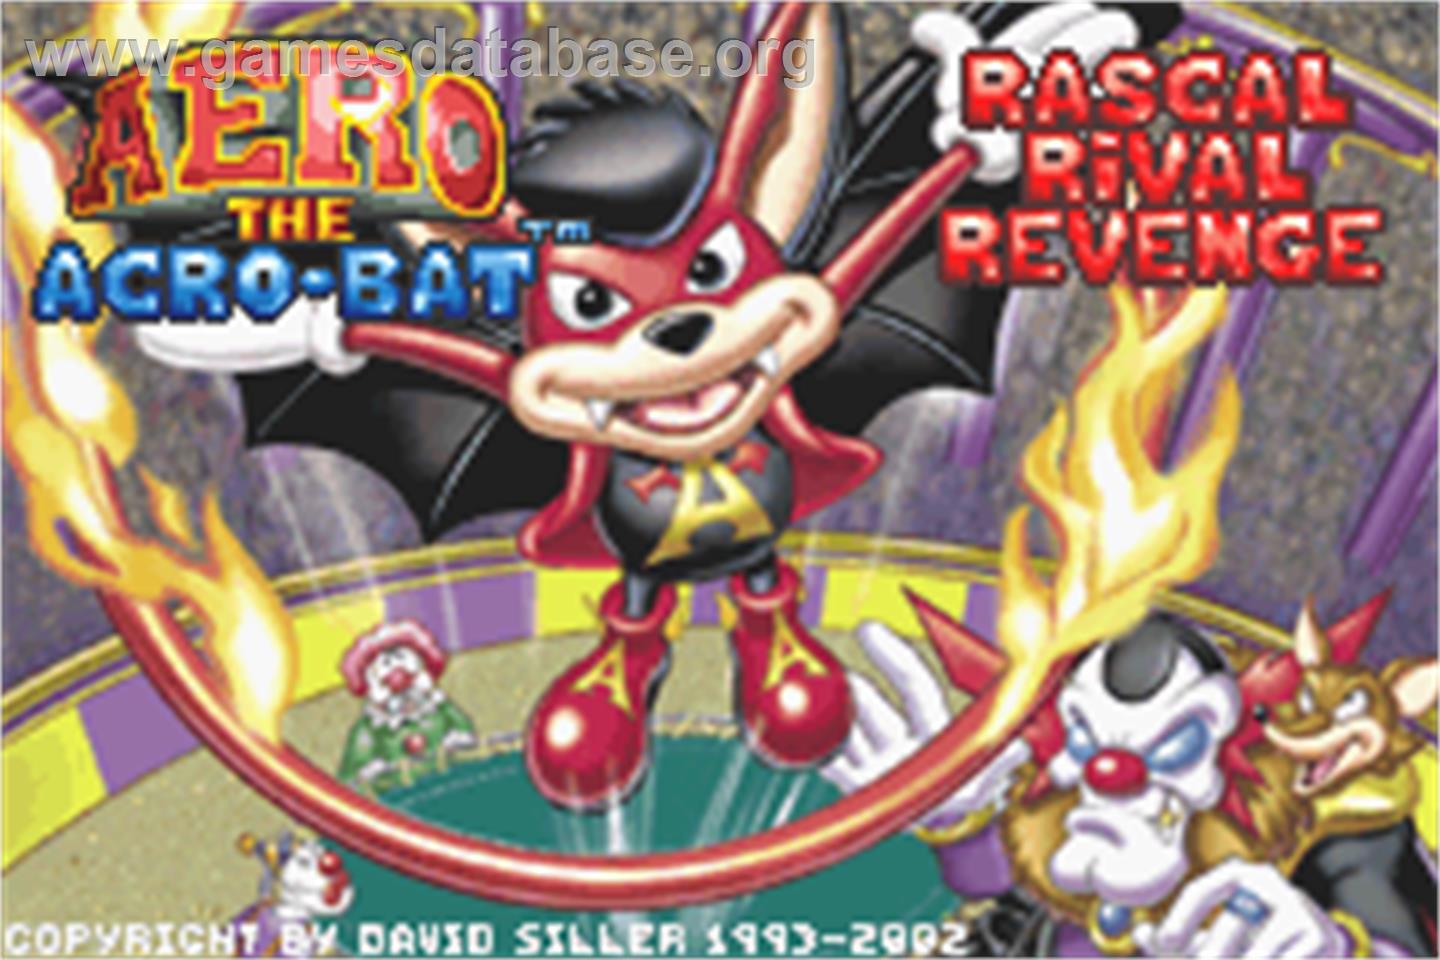 Aero the Acro-Bat: Rascal Rival Revenge - Nintendo Game Boy Advance - Artwork - Title Screen